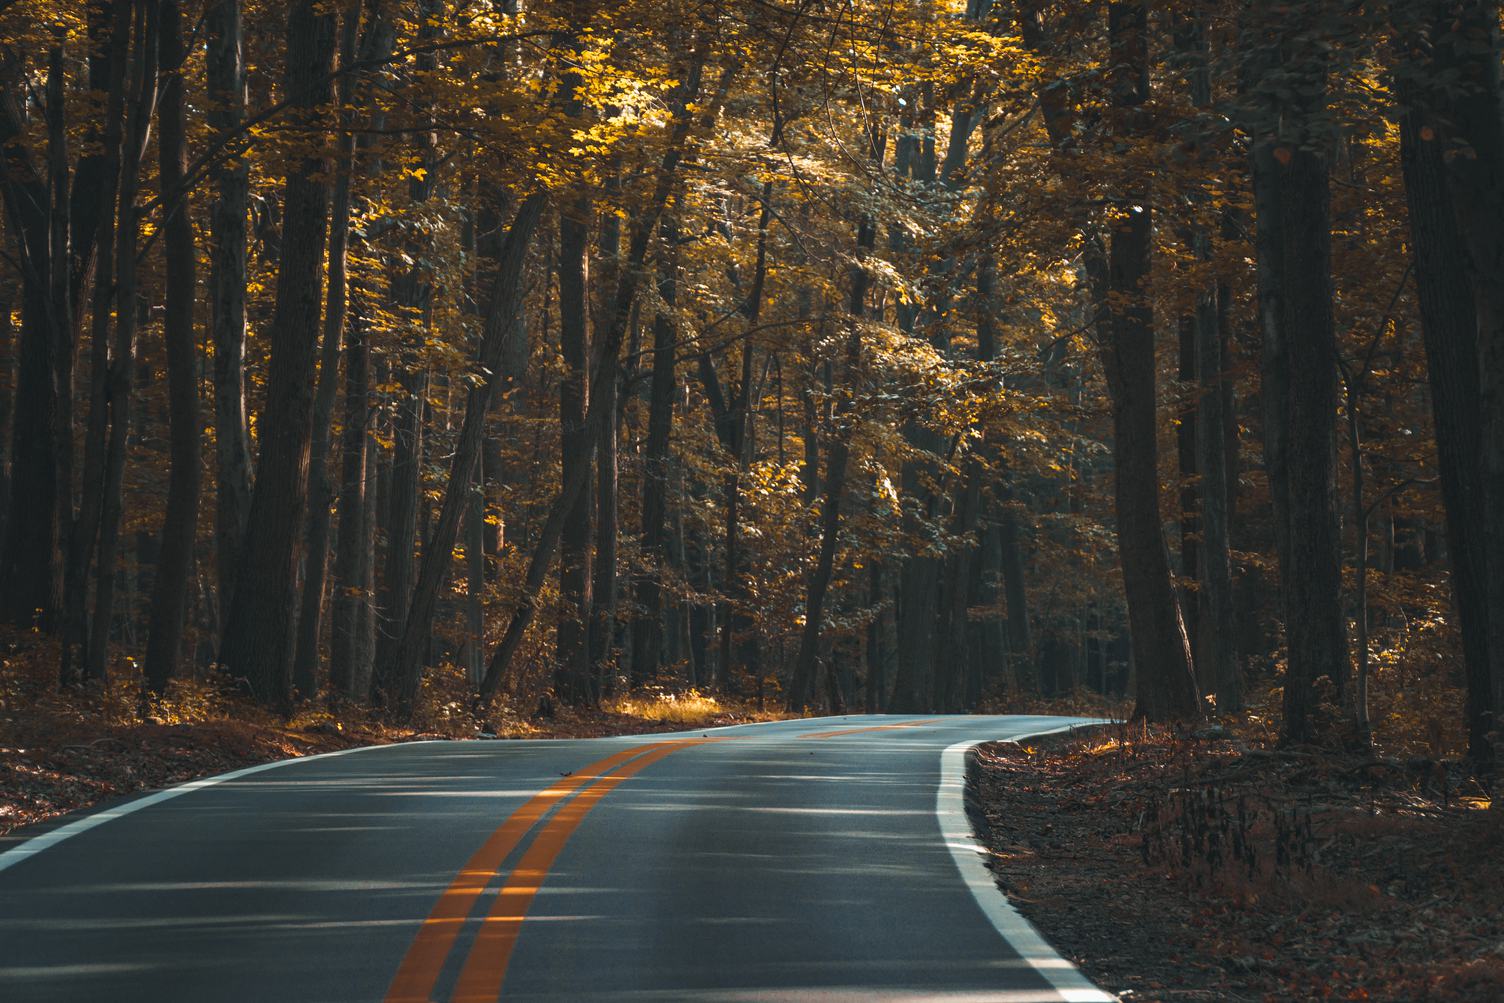 Road Curves Through Autumn Forest